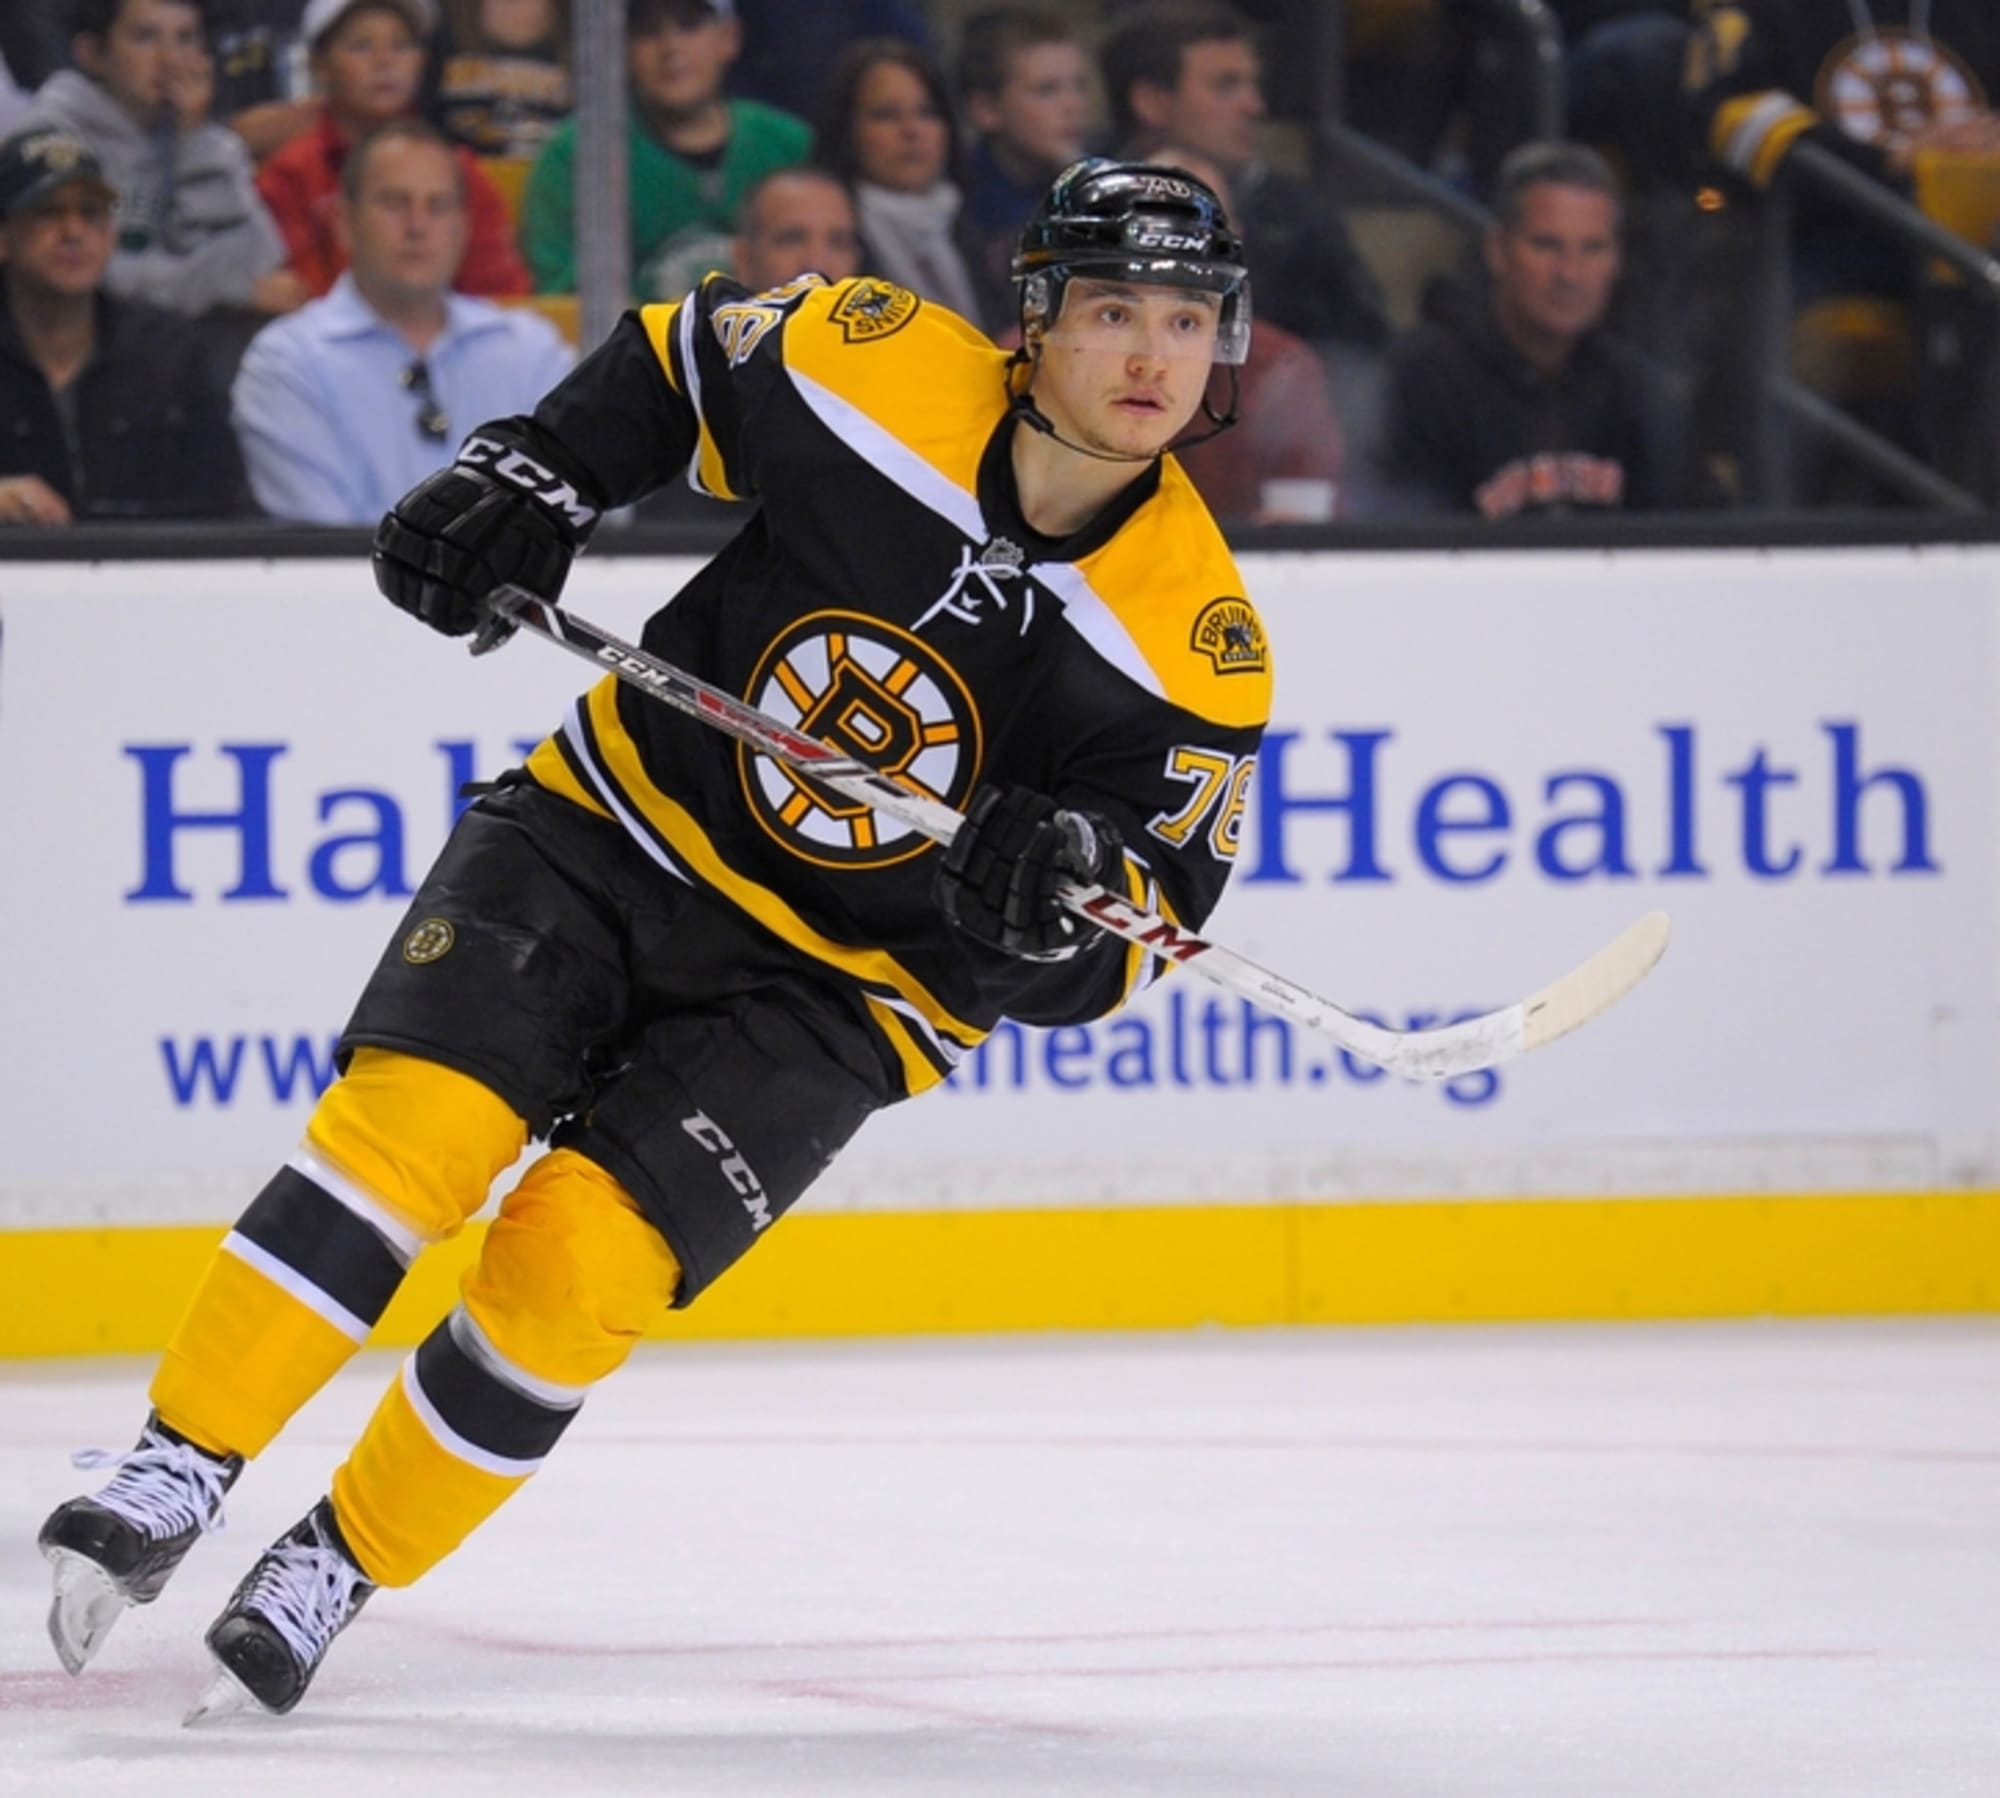 Former Boston Bruins Defensemen Signs New Contract